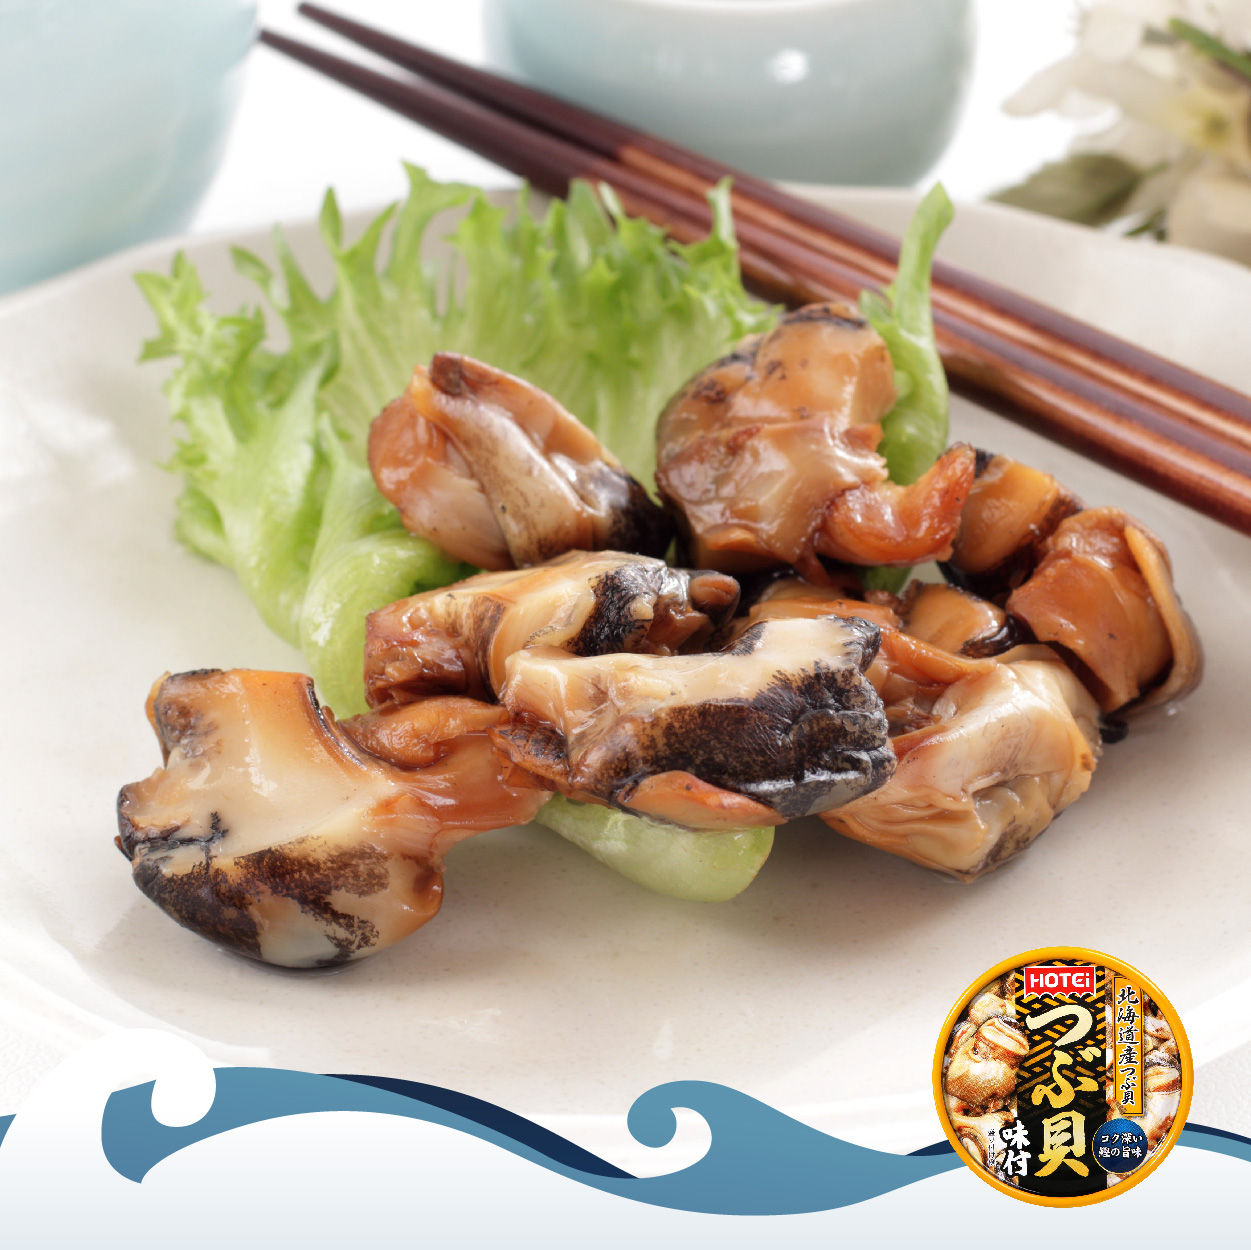 HOTEi 北海道味付螺貝罐 新鮮螺肉 肉質脆有嚼勁 香濃調味即開即食！